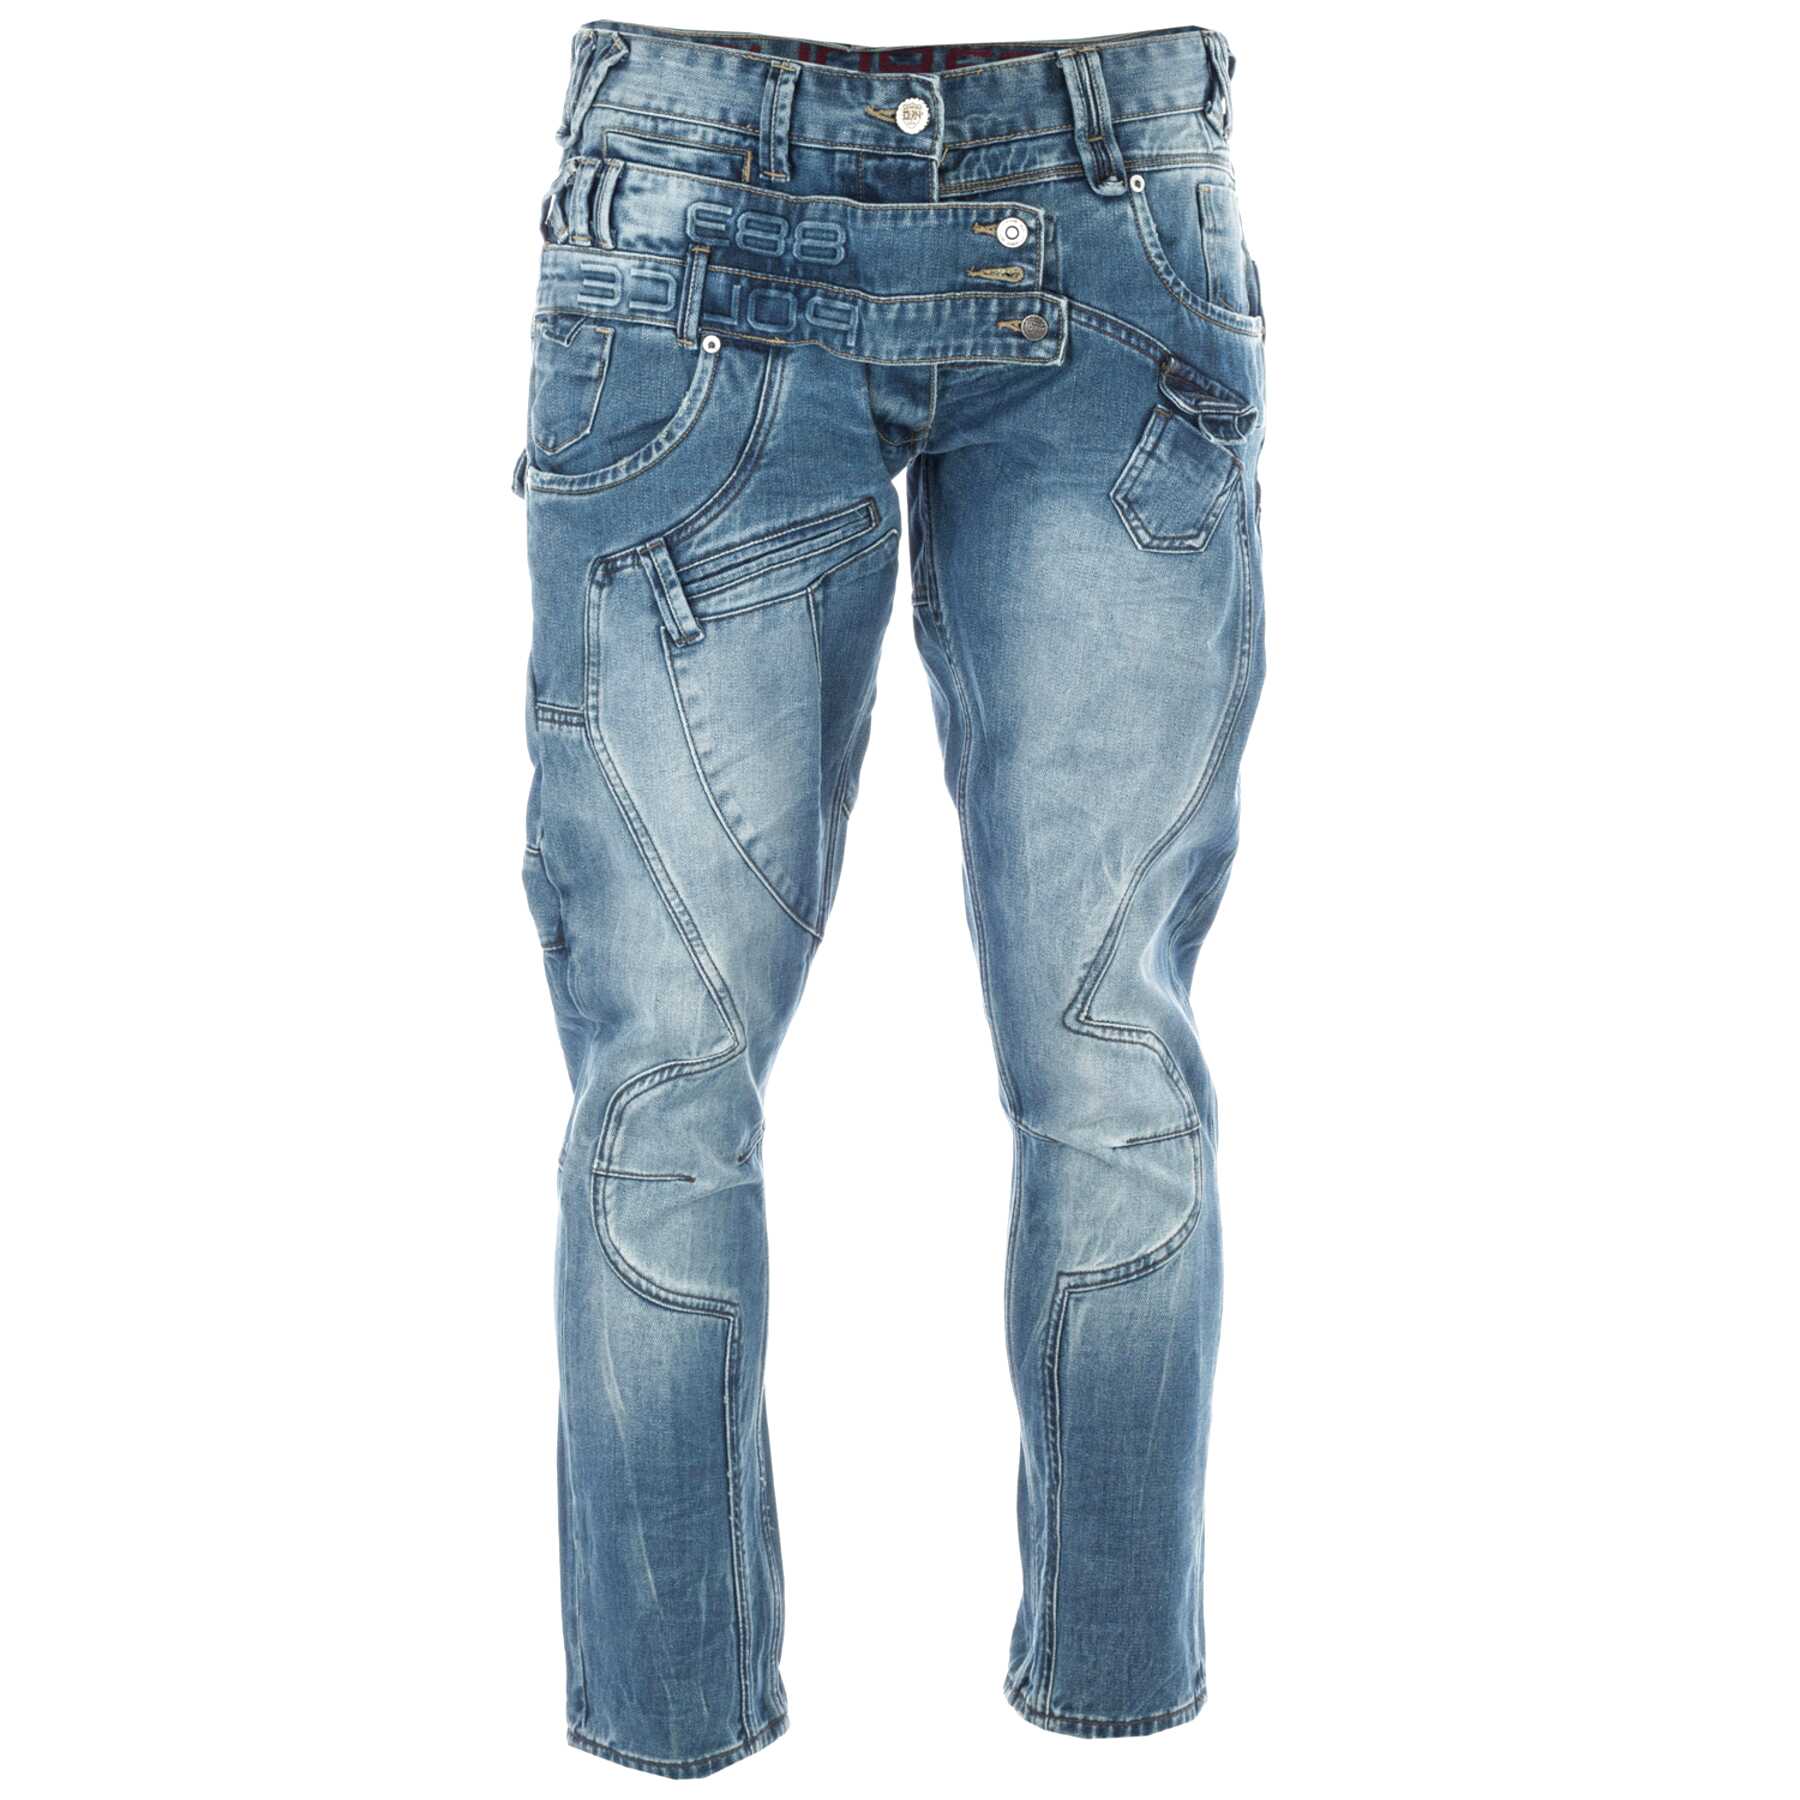 police jeans 883 sale